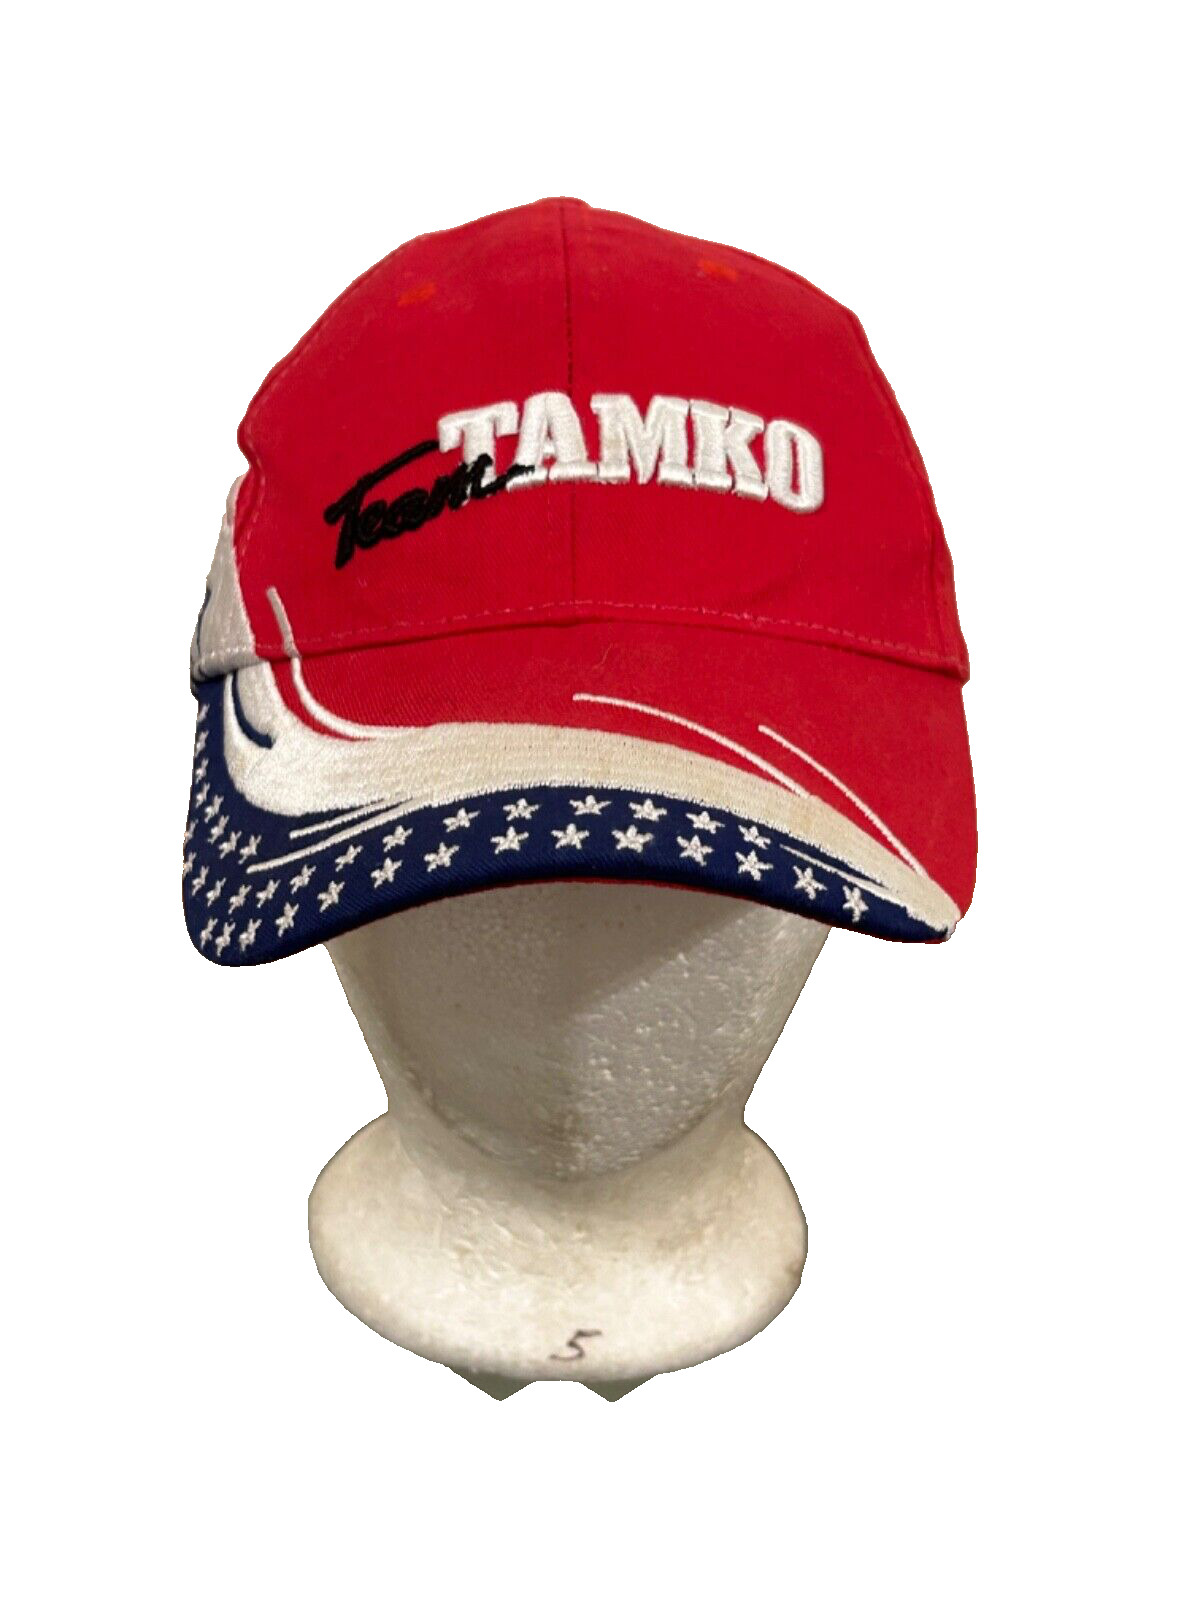 Team Tamko Patriotic Ball Cap Hat Red Embroidery USA Flag Hook & Loop 4 Of July